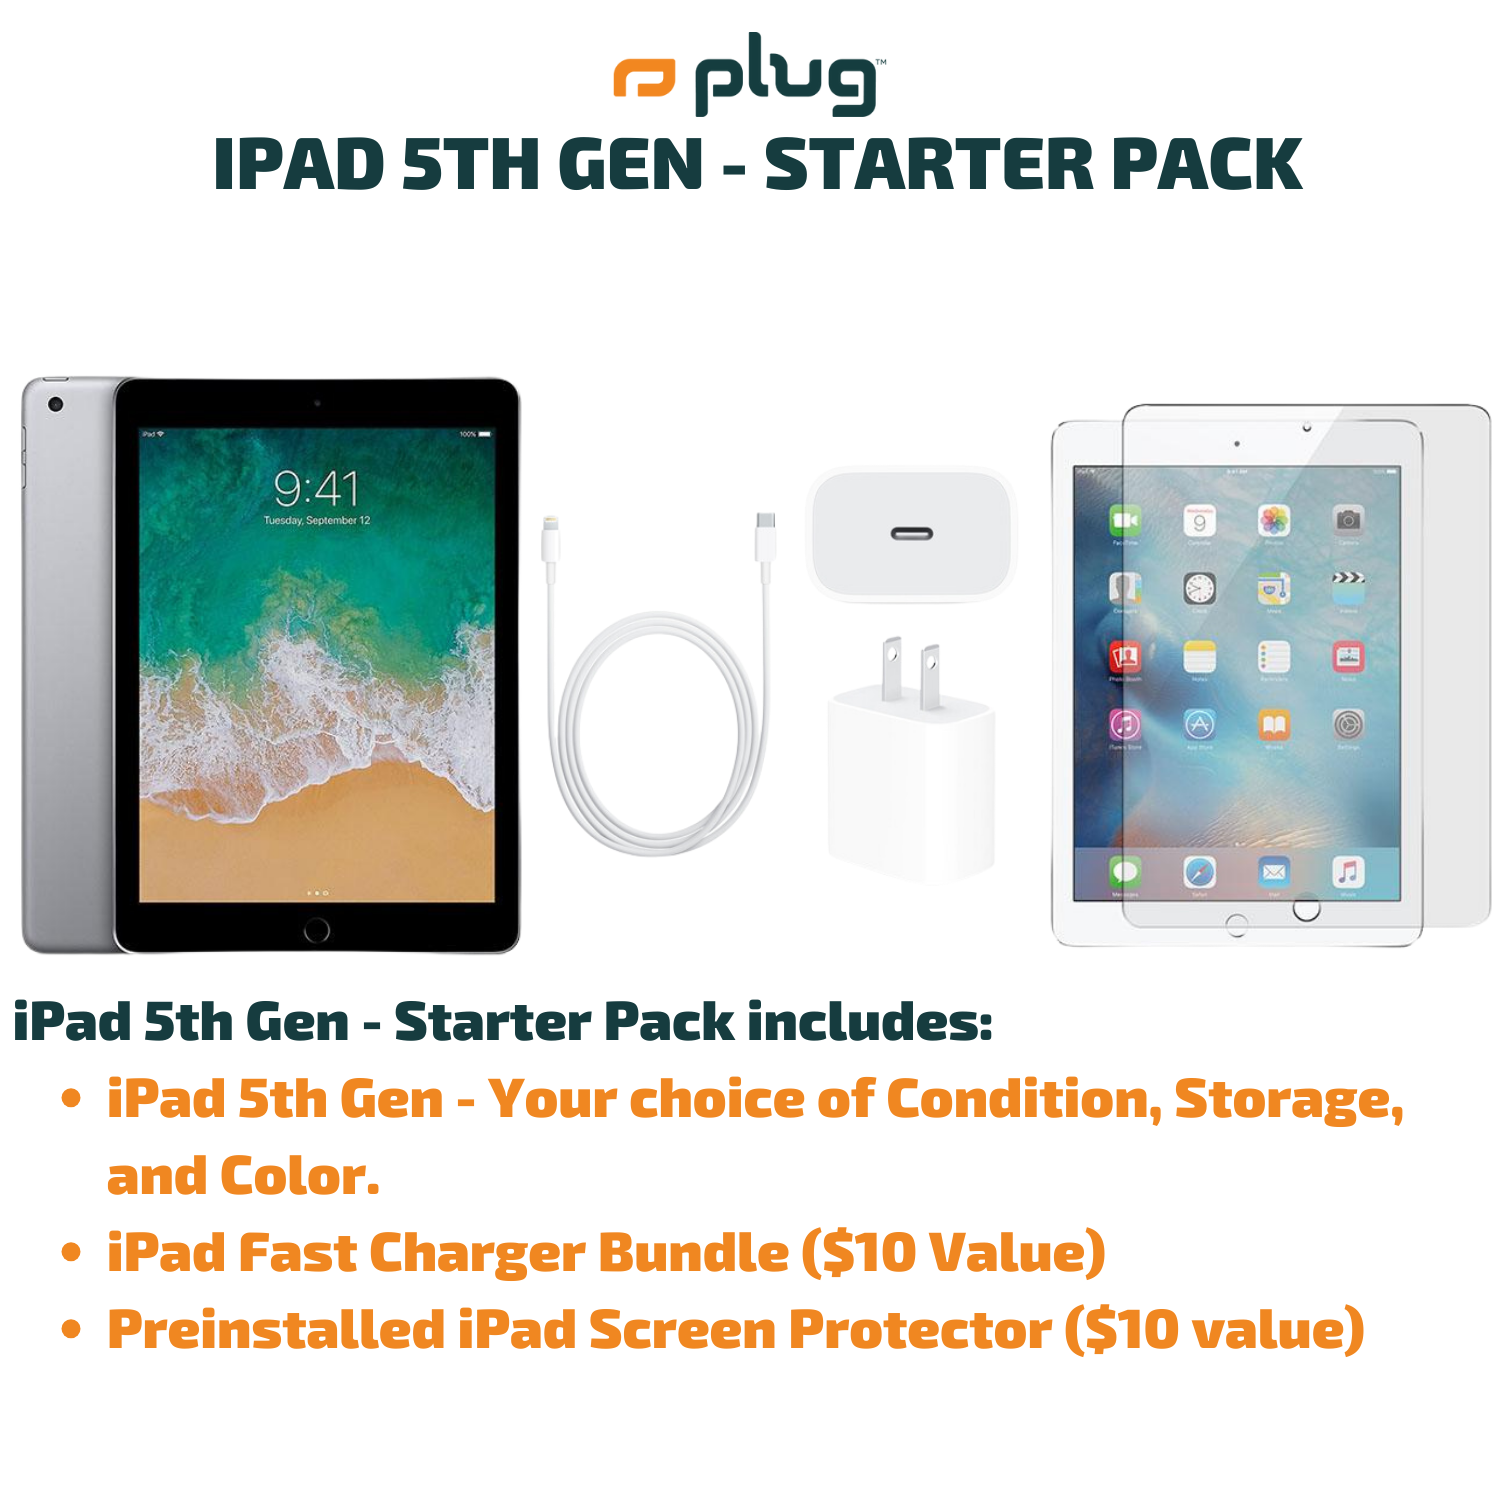 iPad 5th Gen (9.7") Starter Pack